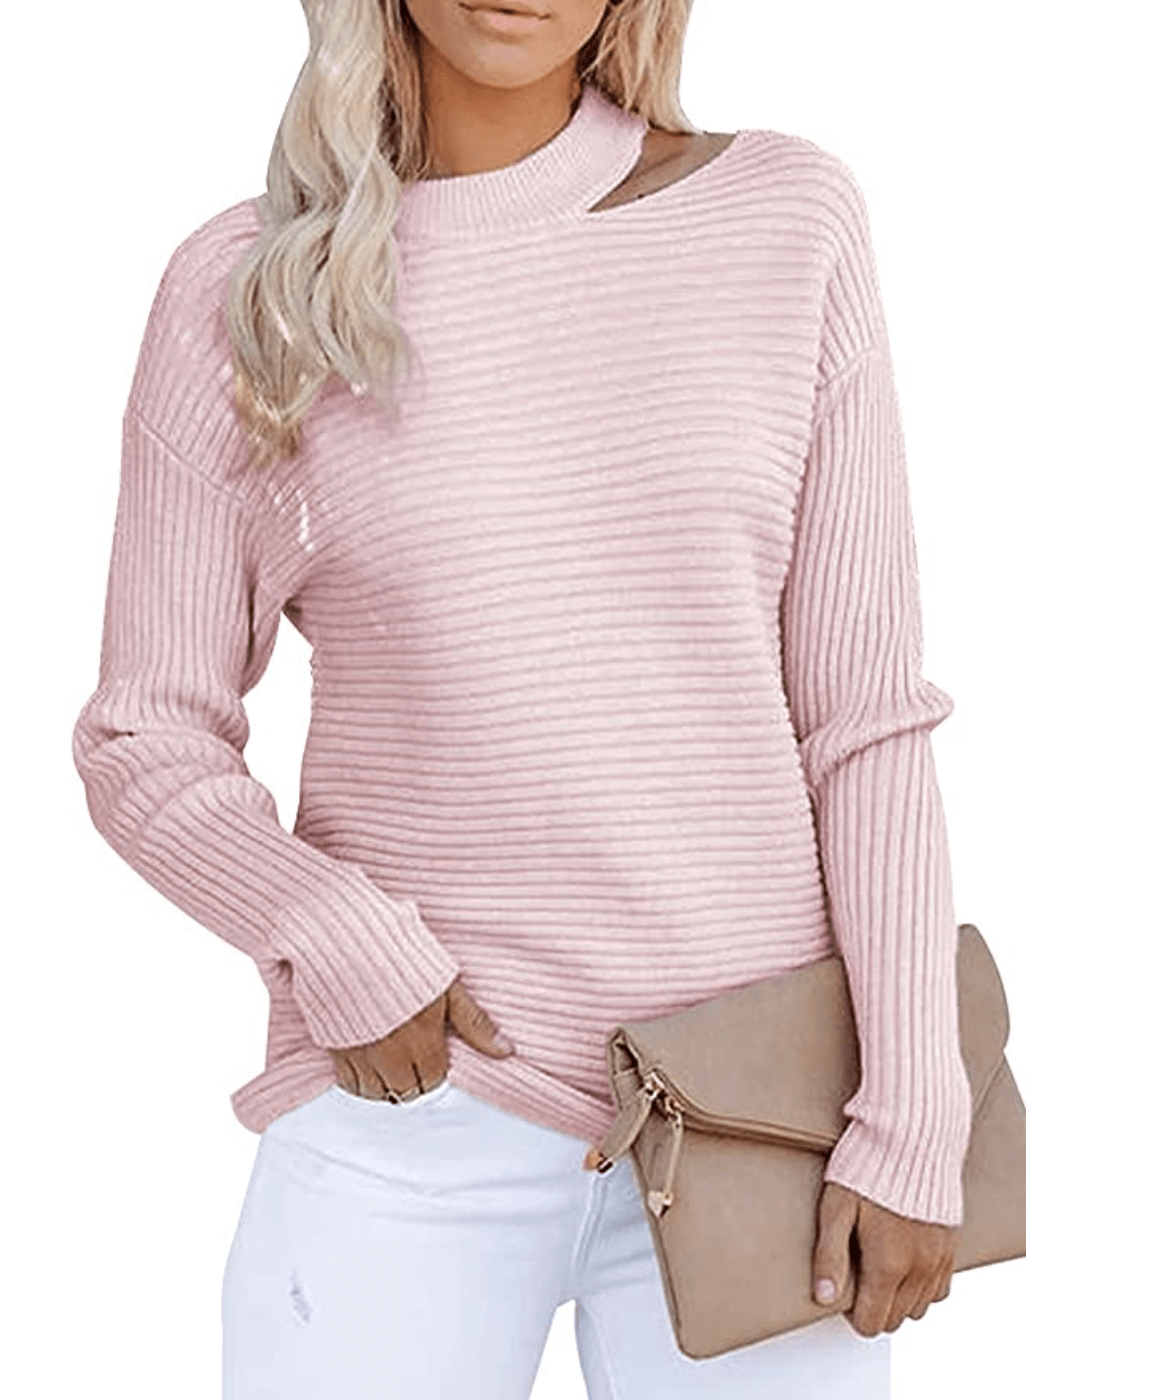 Top Fashion pink cutout sweater